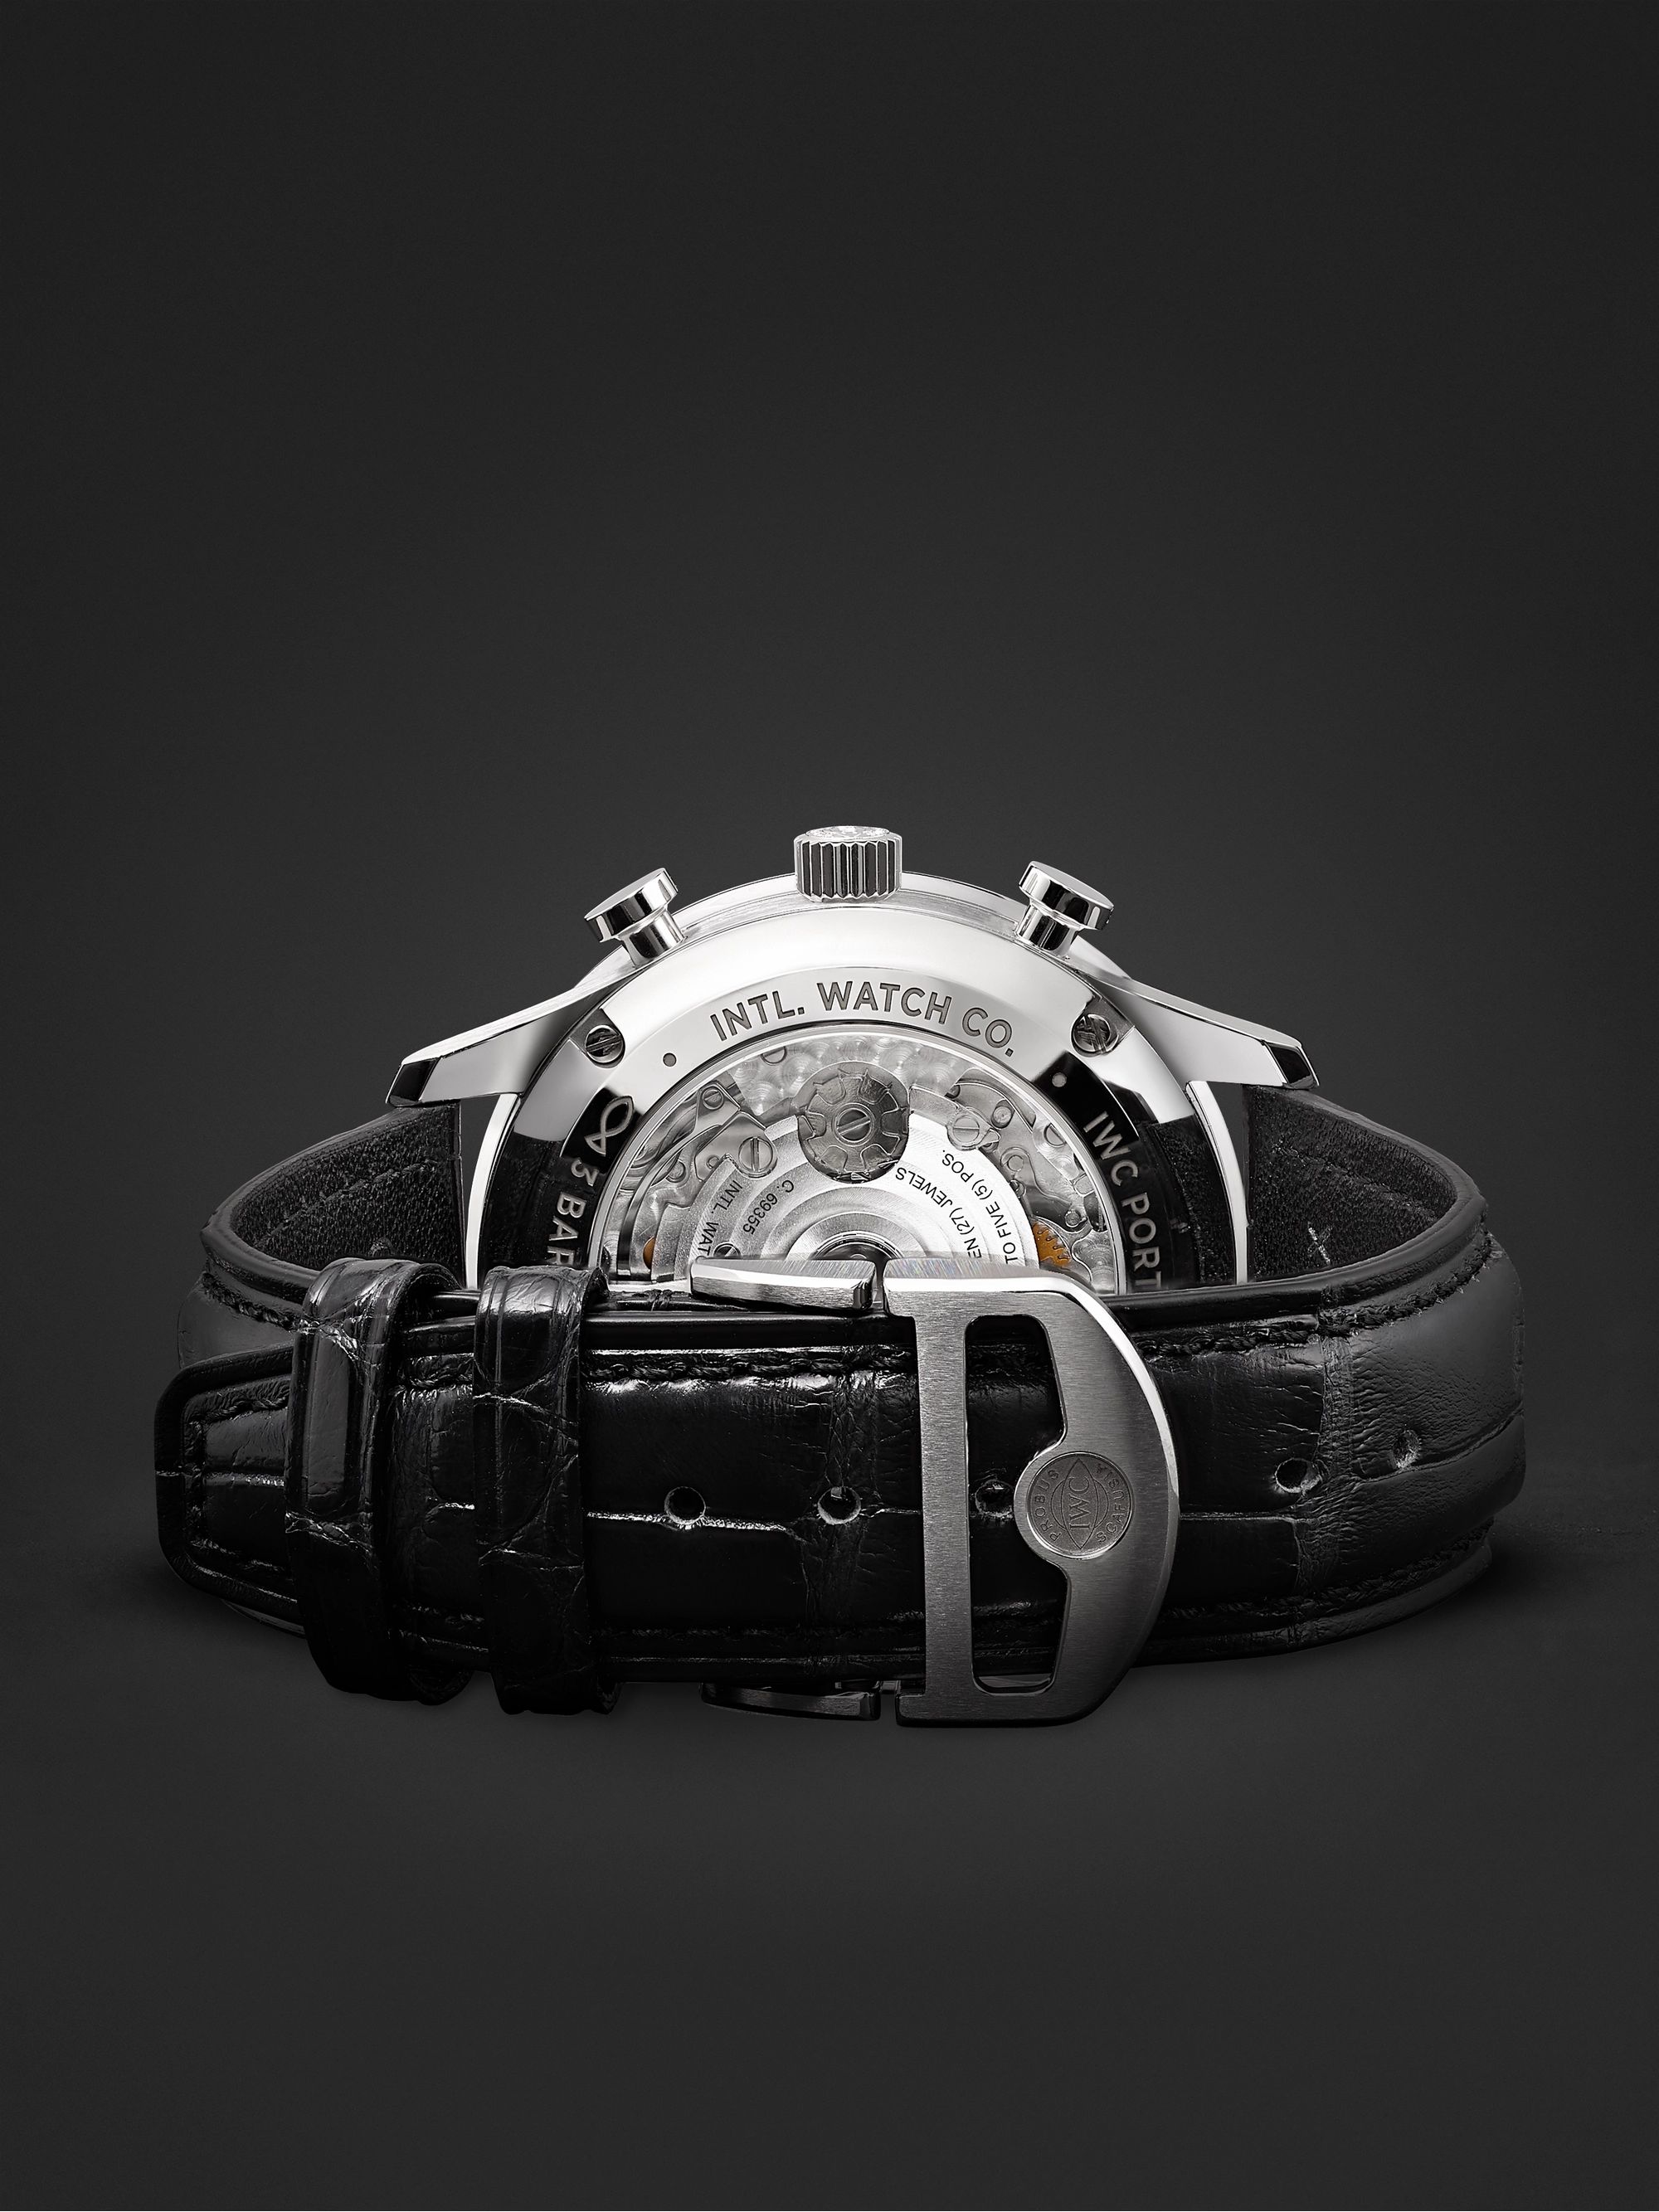 IWC SCHAFFHAUSEN Portugieser Automatic Chronograph 41mm Stainless Steel and Alligator Watch, Ref. No. IW371604